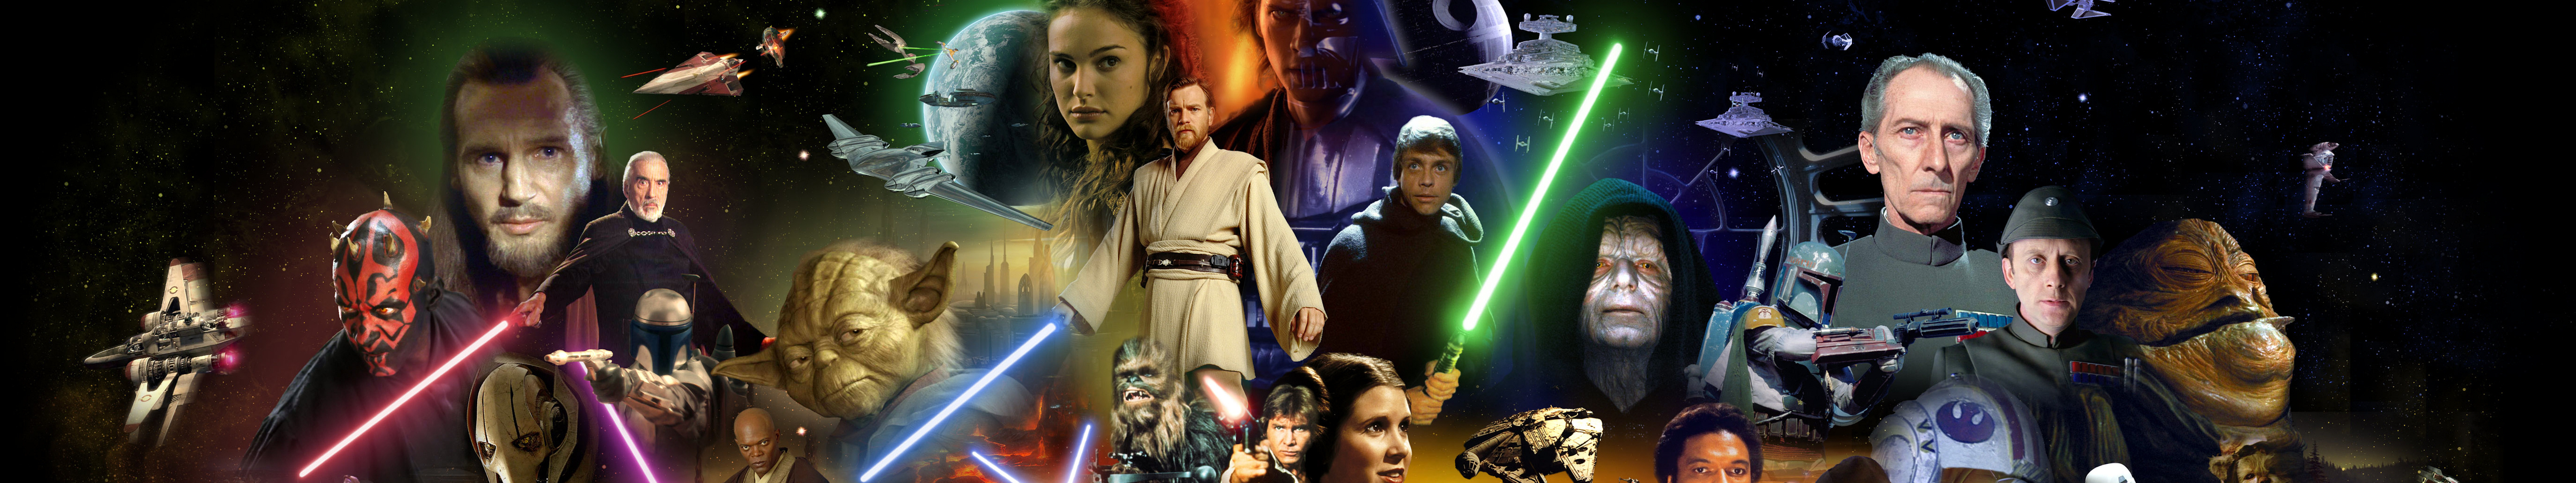 Darth Vader Sith Chewbacca Jabba HD Wallpaper Movies Tv